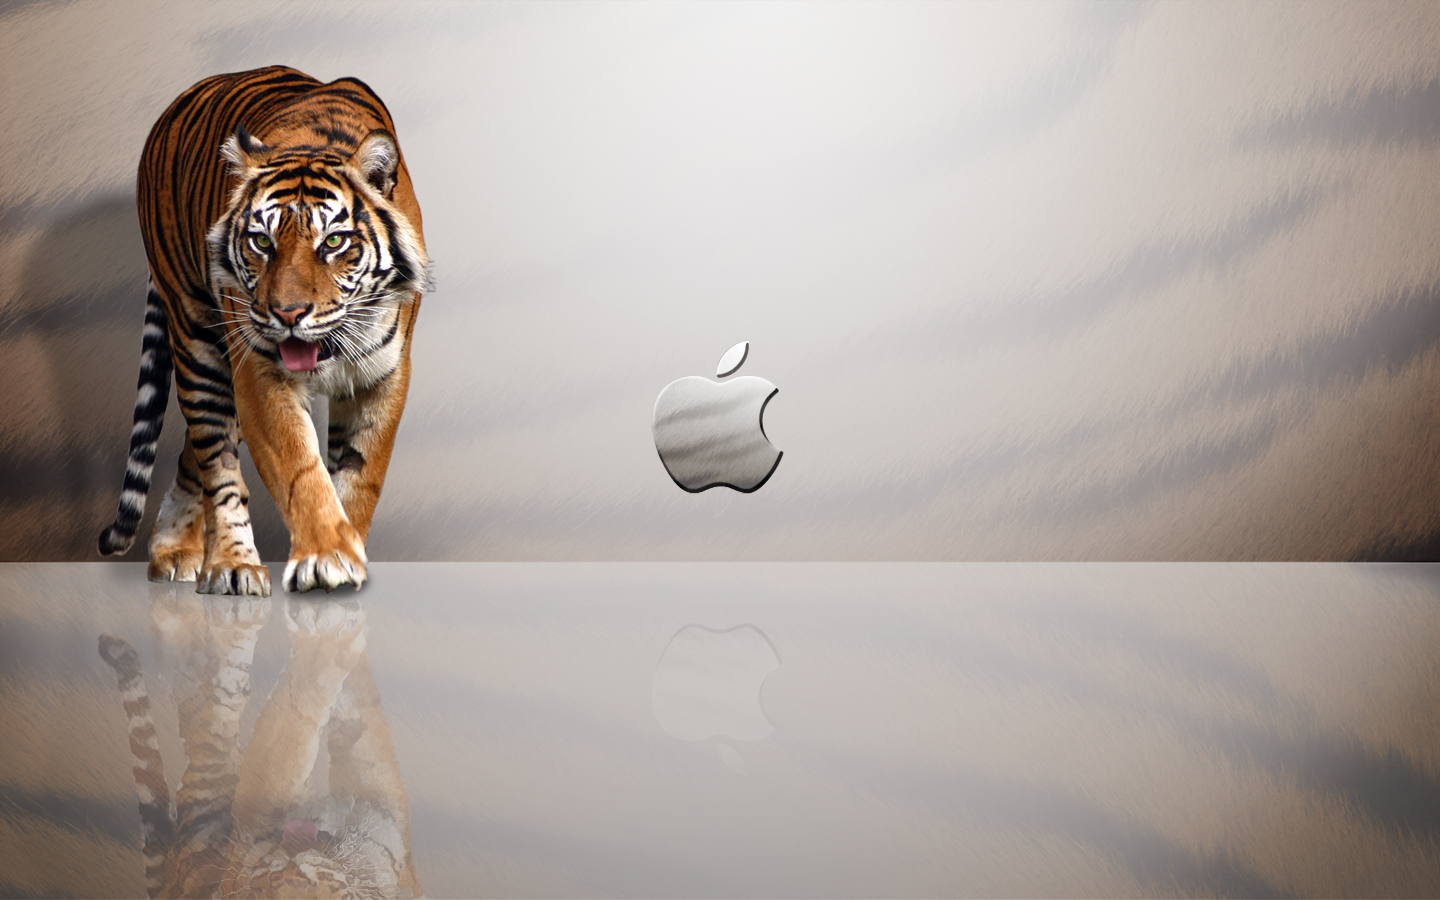 tiger apple mac wallpaper hd broken desktop apple mac wallpaper